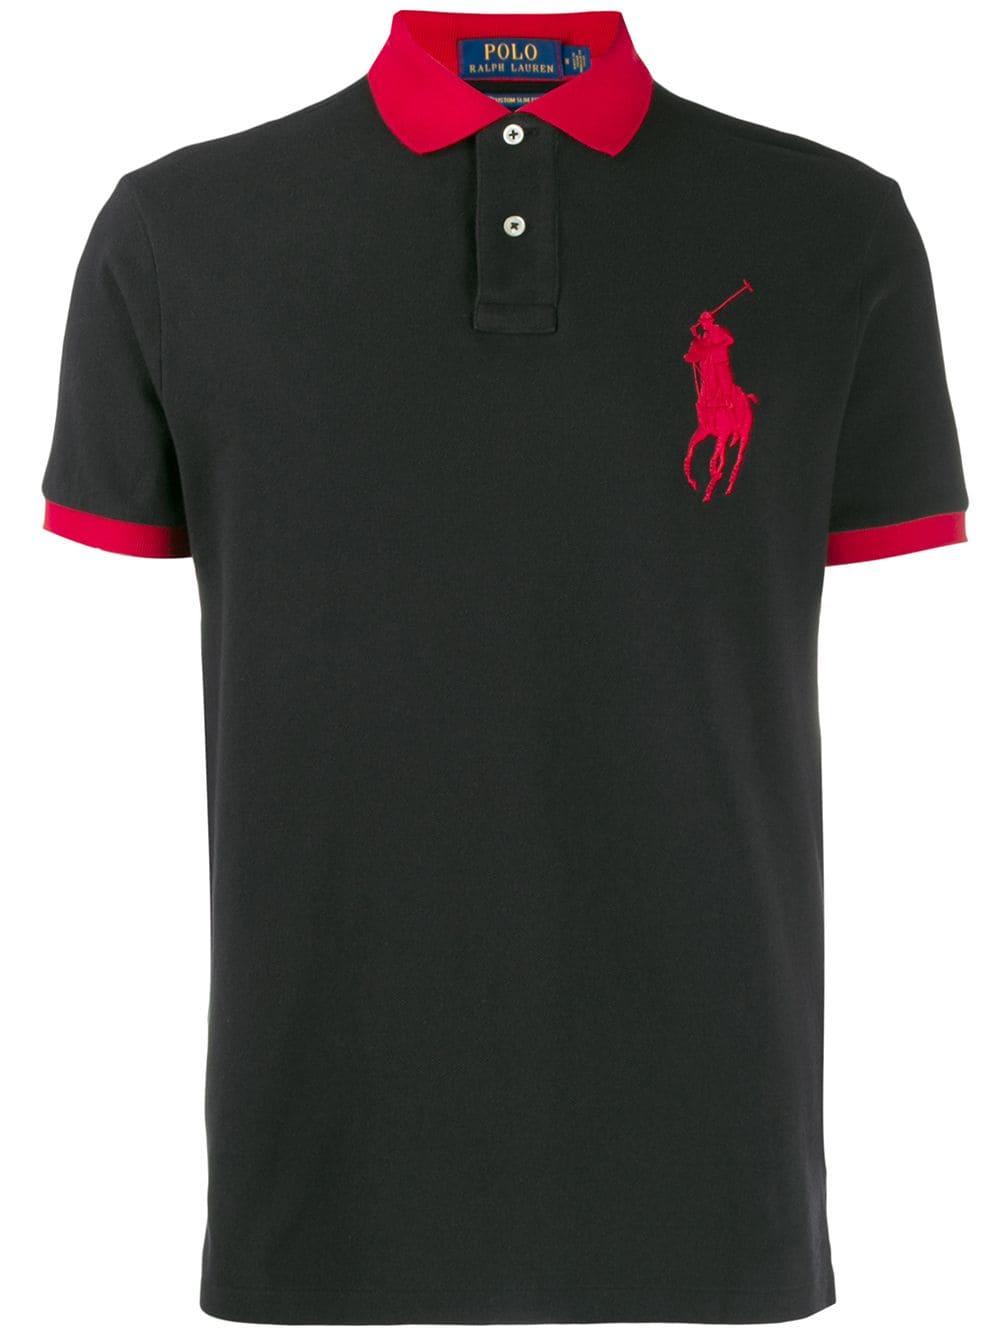 Polo Ralph Lauren Big Pony Polo Shirt in Black for Men - Lyst